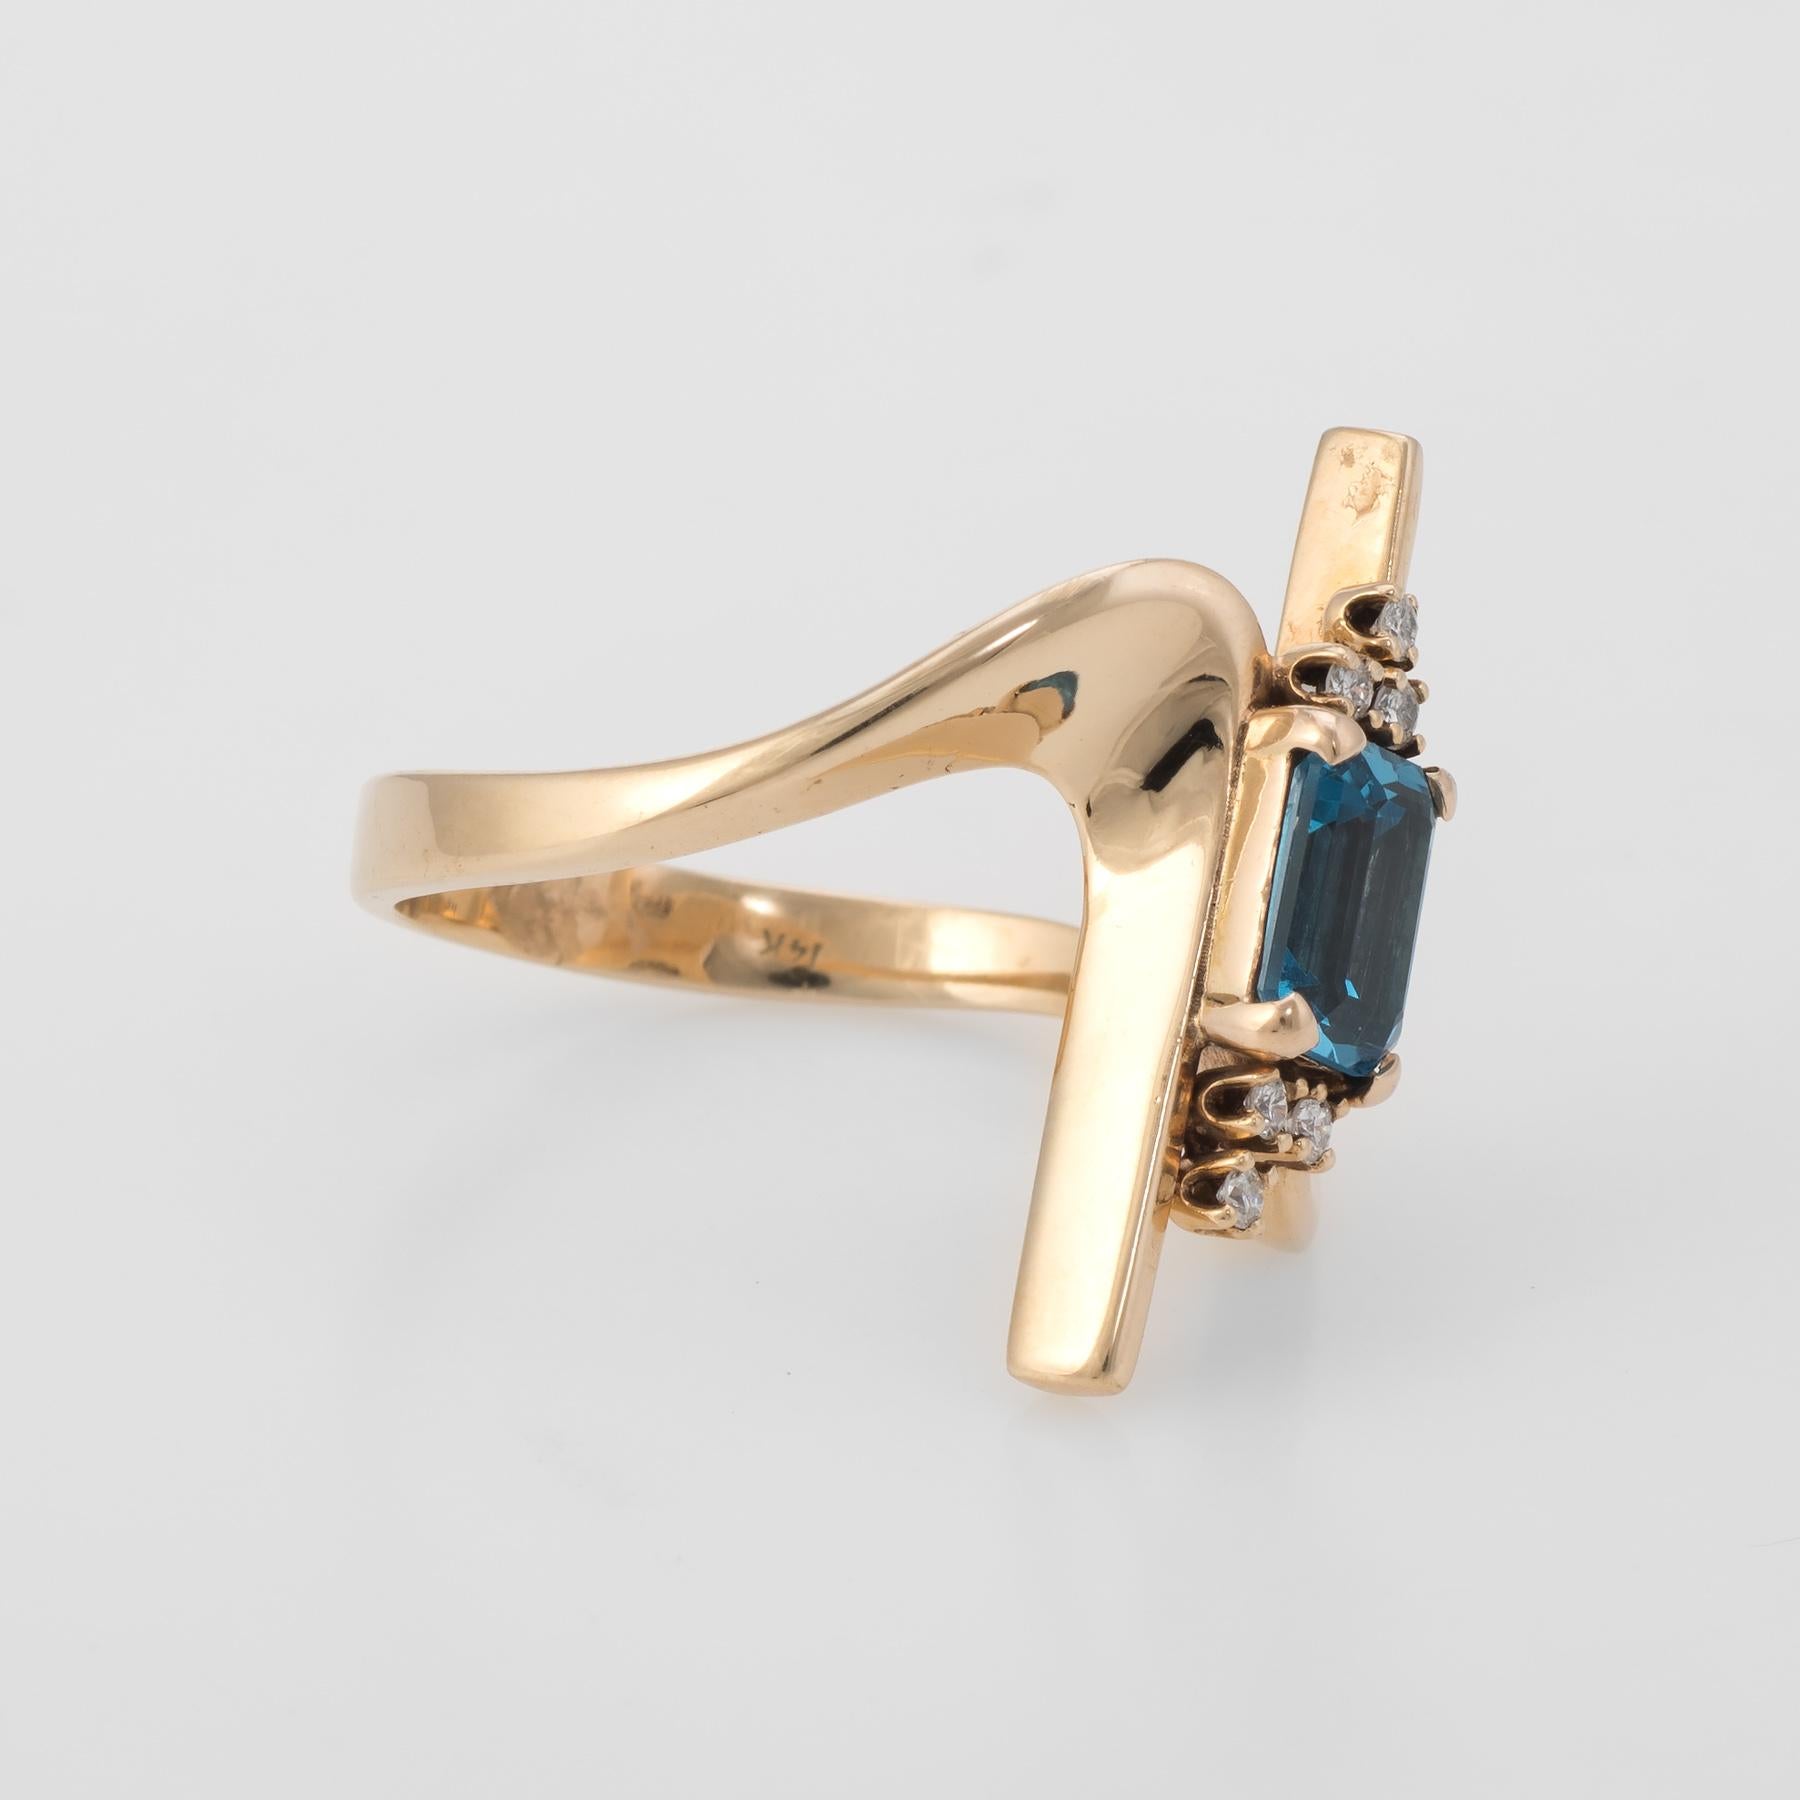 Emerald Cut 1960s Blue Topaz Diamond Cocktail Ring Vintage 14 Karat Gold Estate Jewelry